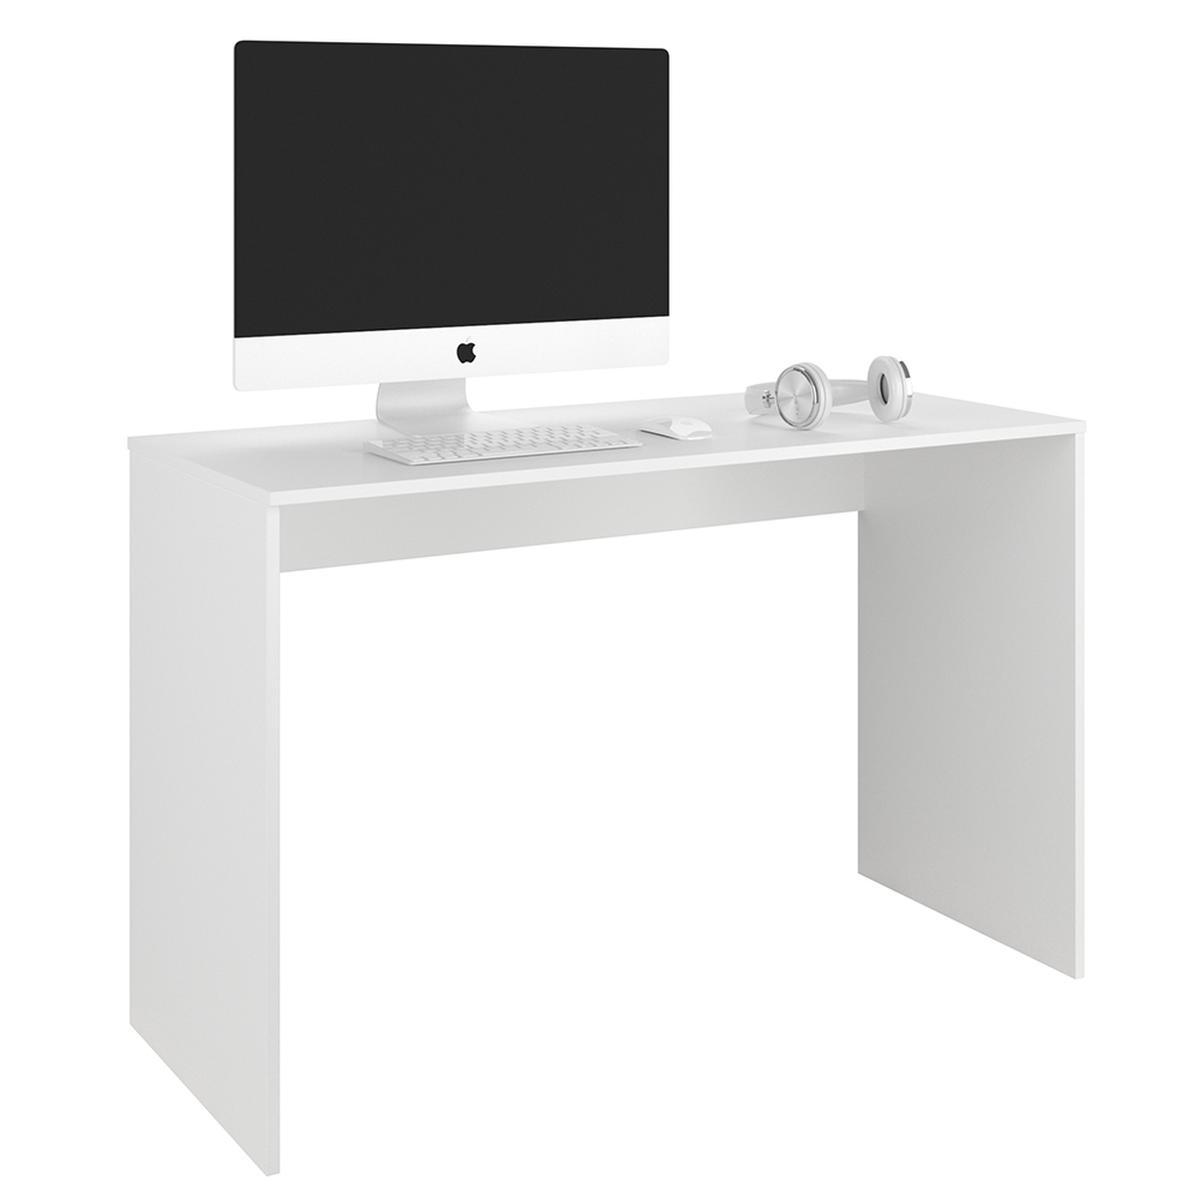 Biurko narożne MODERN 130 cm białe z szafką i półkami do biura  1 Full Screen